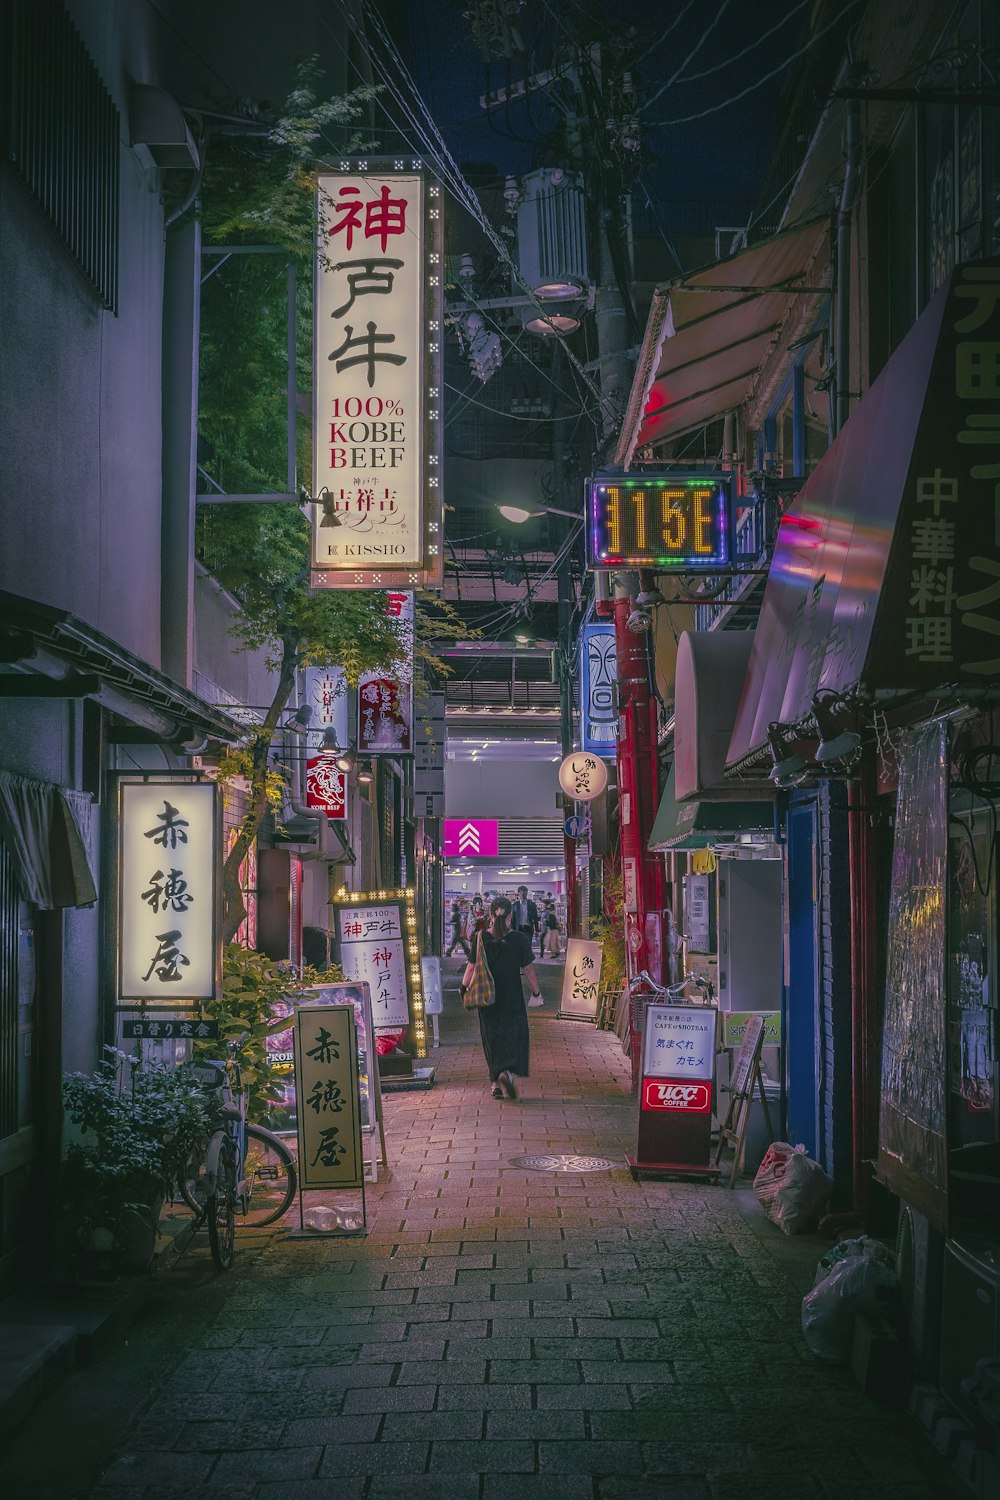 a person walking down a narrow street at night